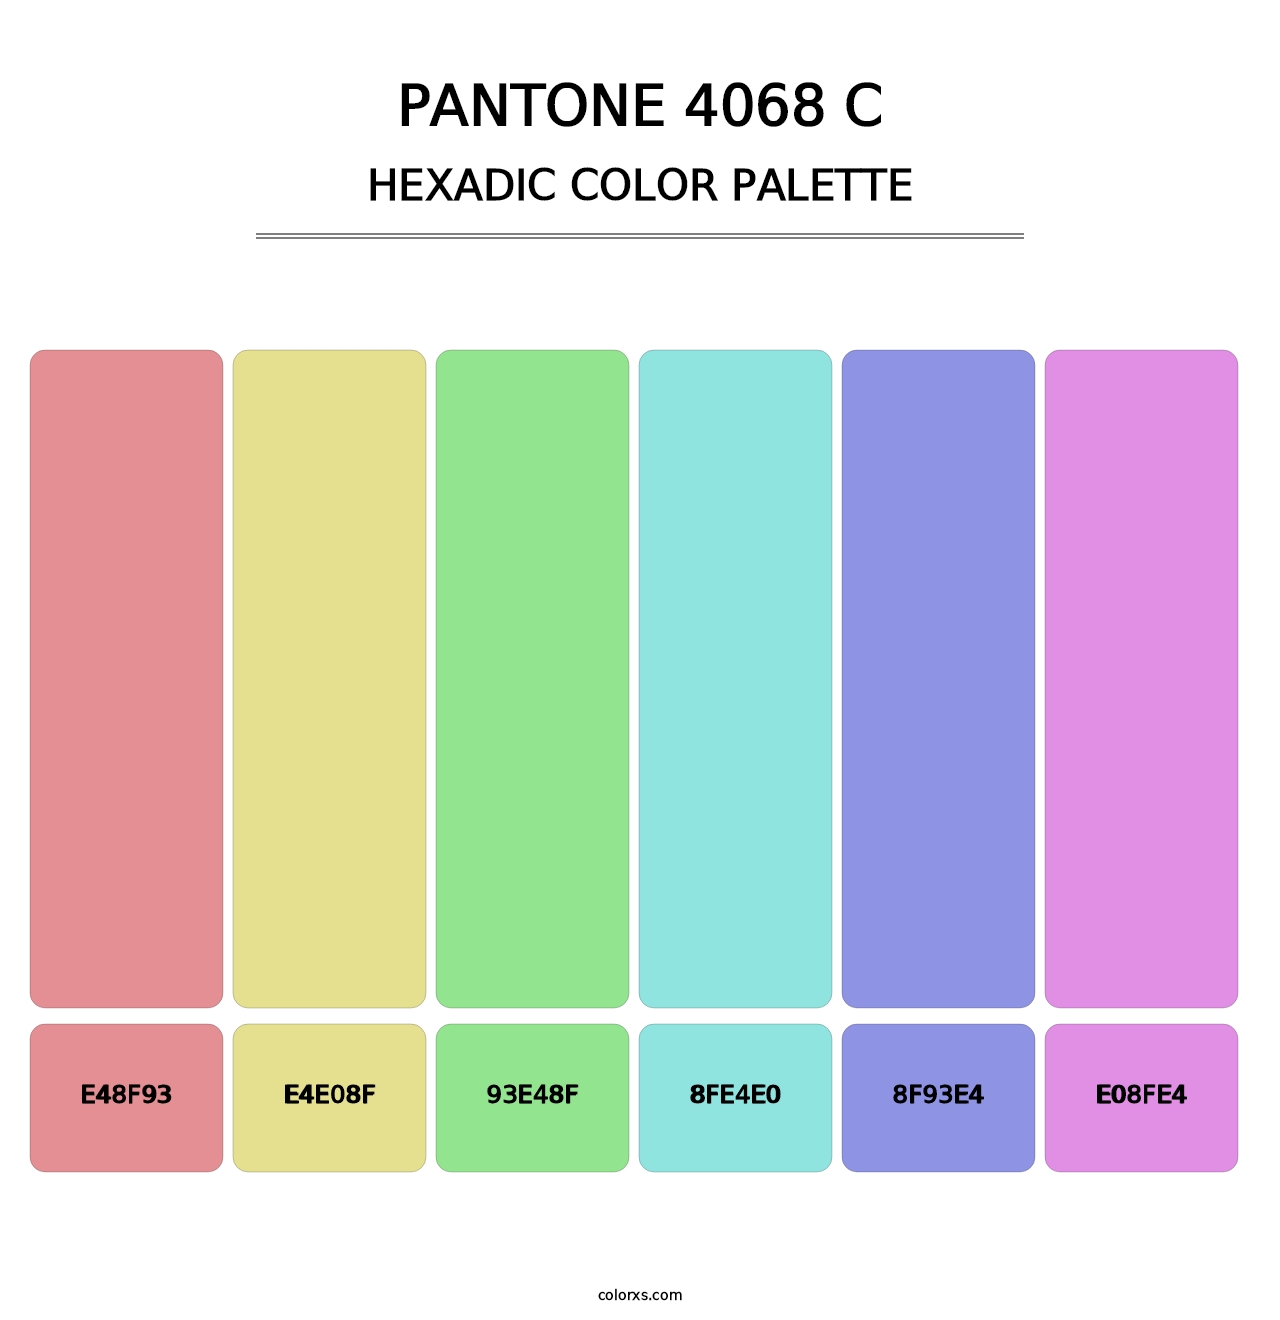 PANTONE 4068 C - Hexadic Color Palette